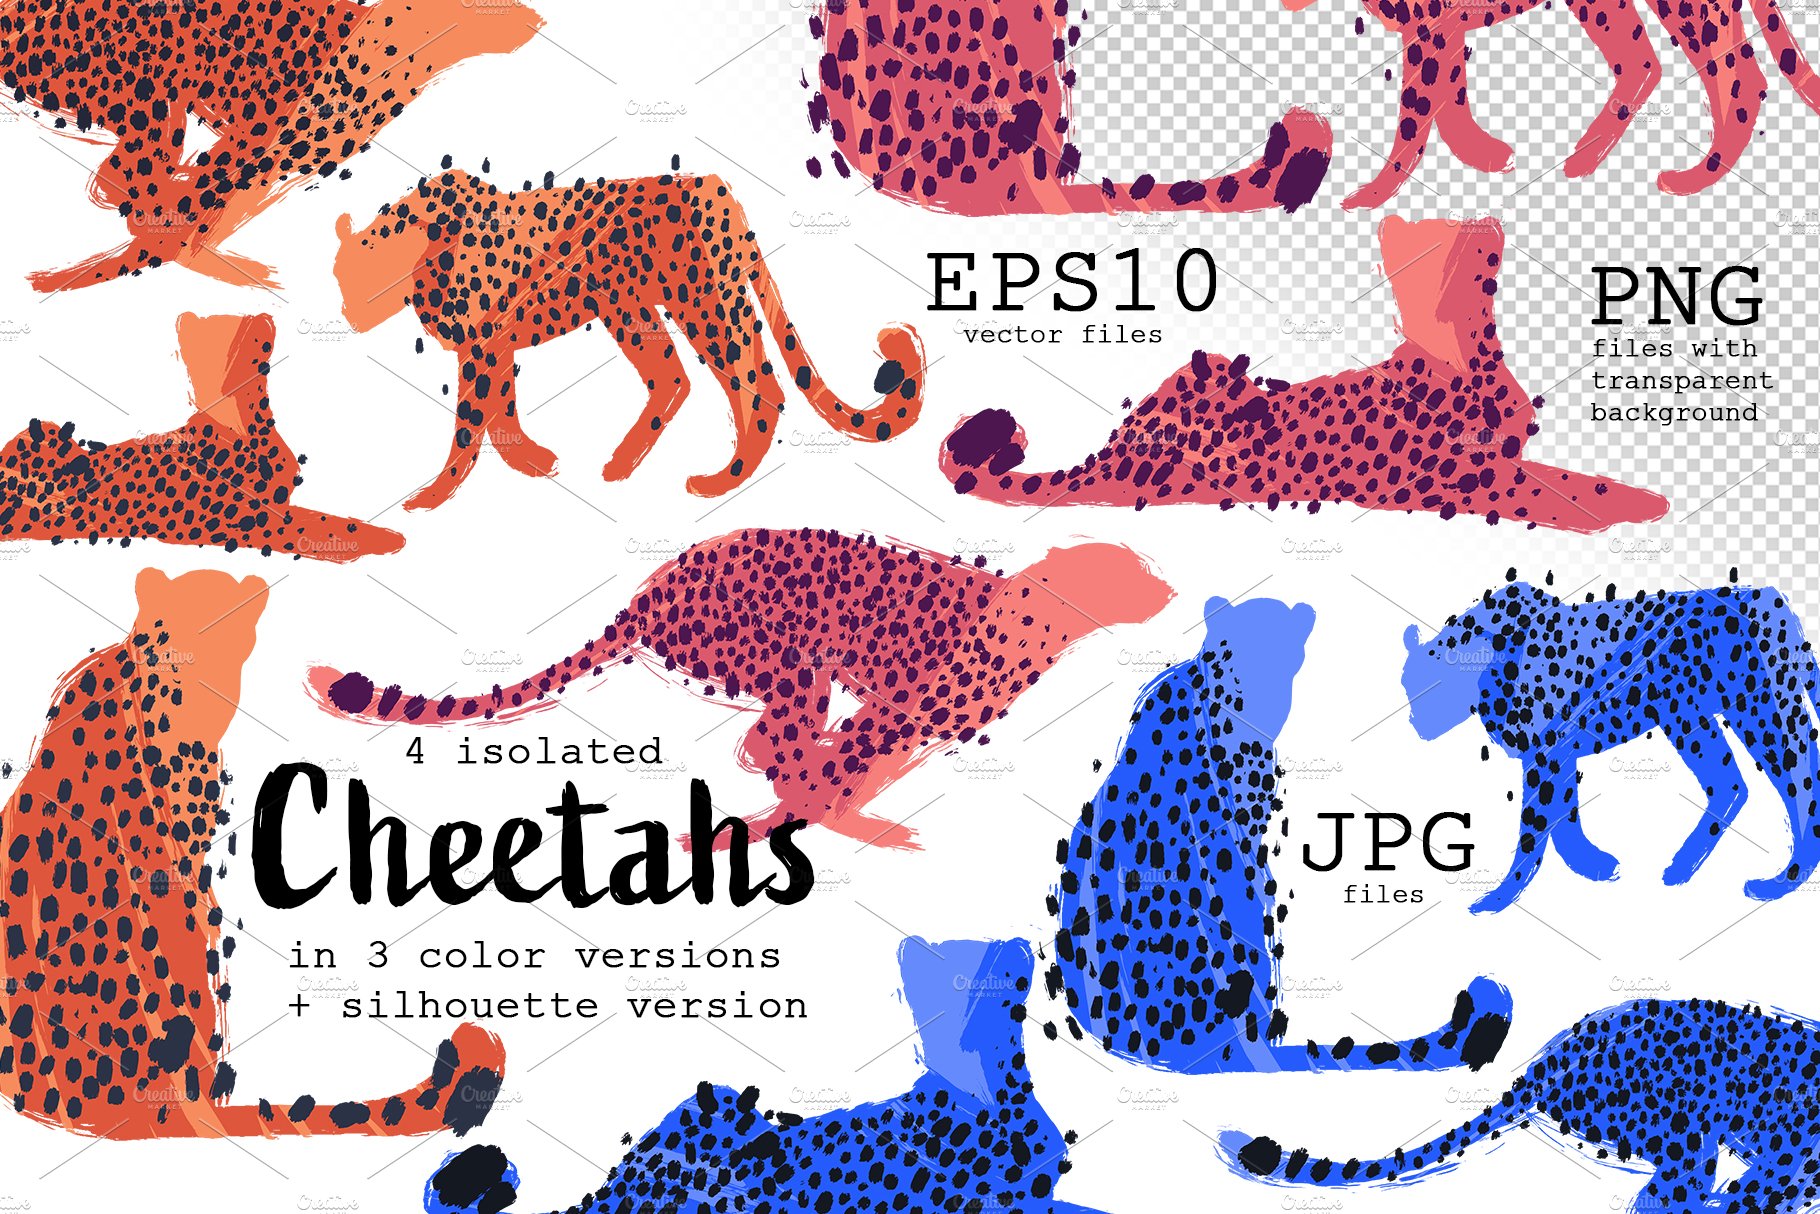 Vector cheetahs preview image.